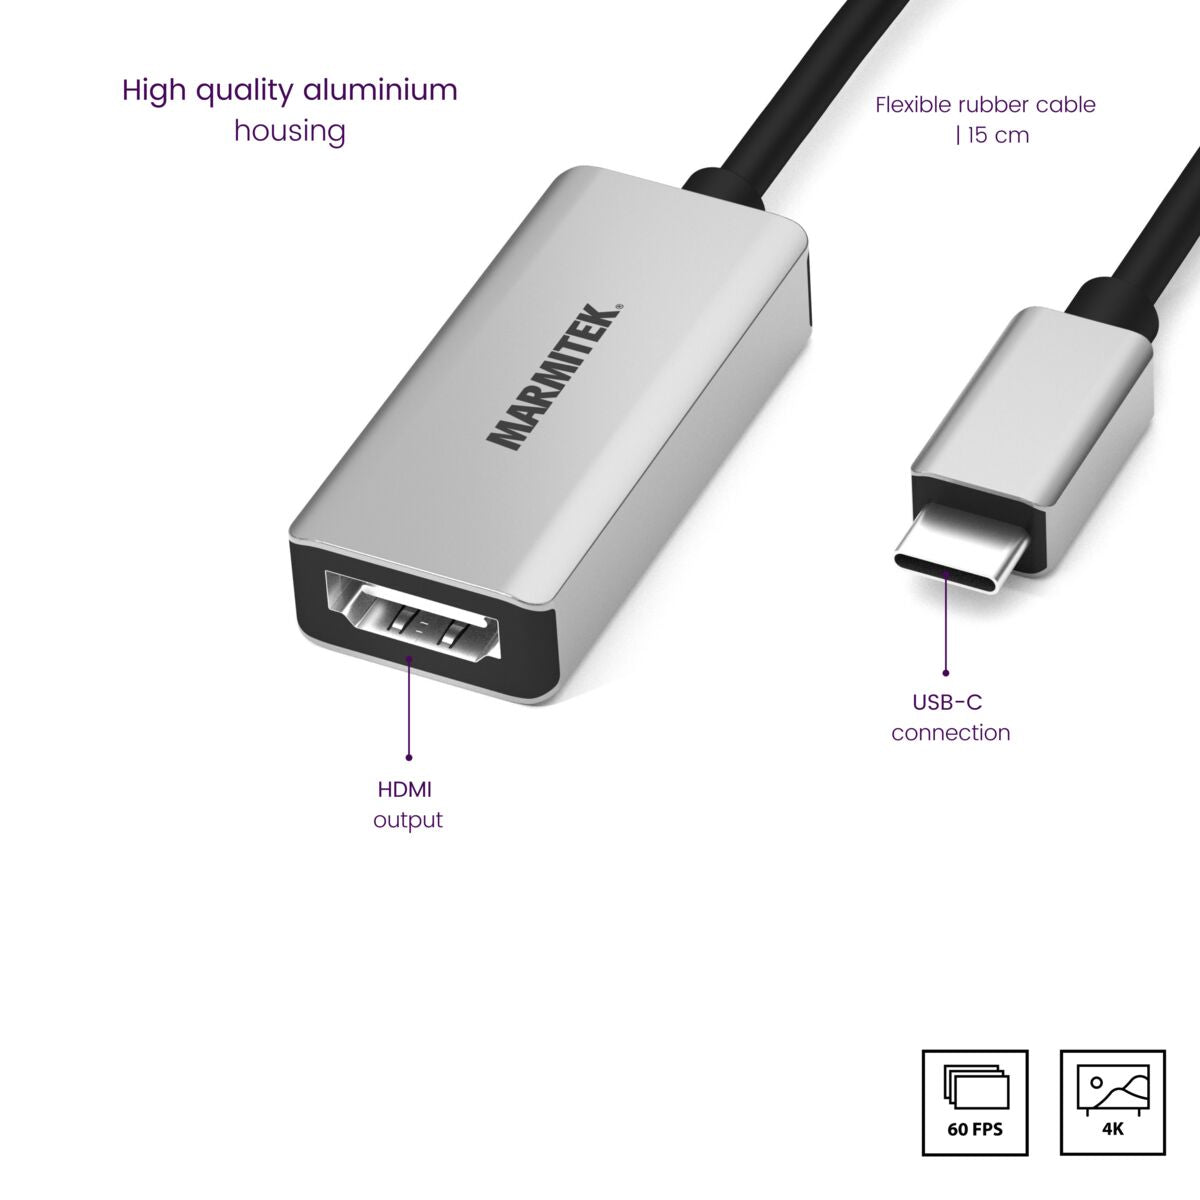 Acheter un adaptateur USB-C vers HDMI ?